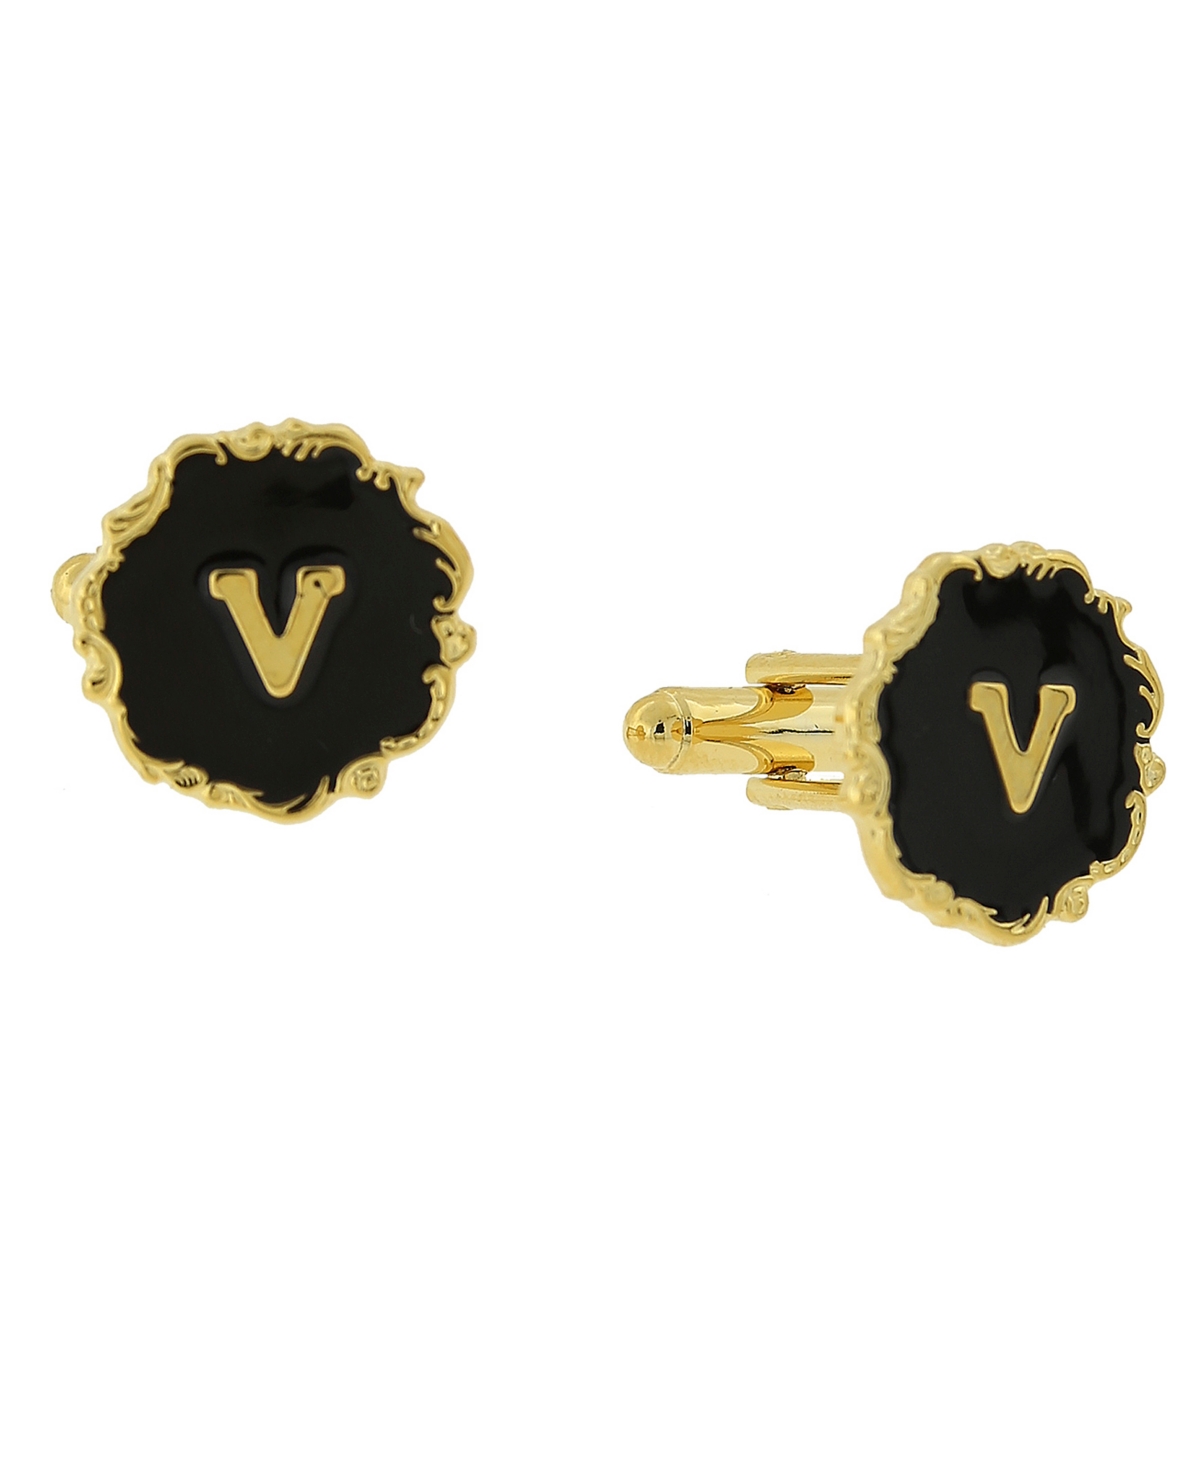 Jewelry 14K Gold-Plated Enamel Initial V Cufflinks - Black